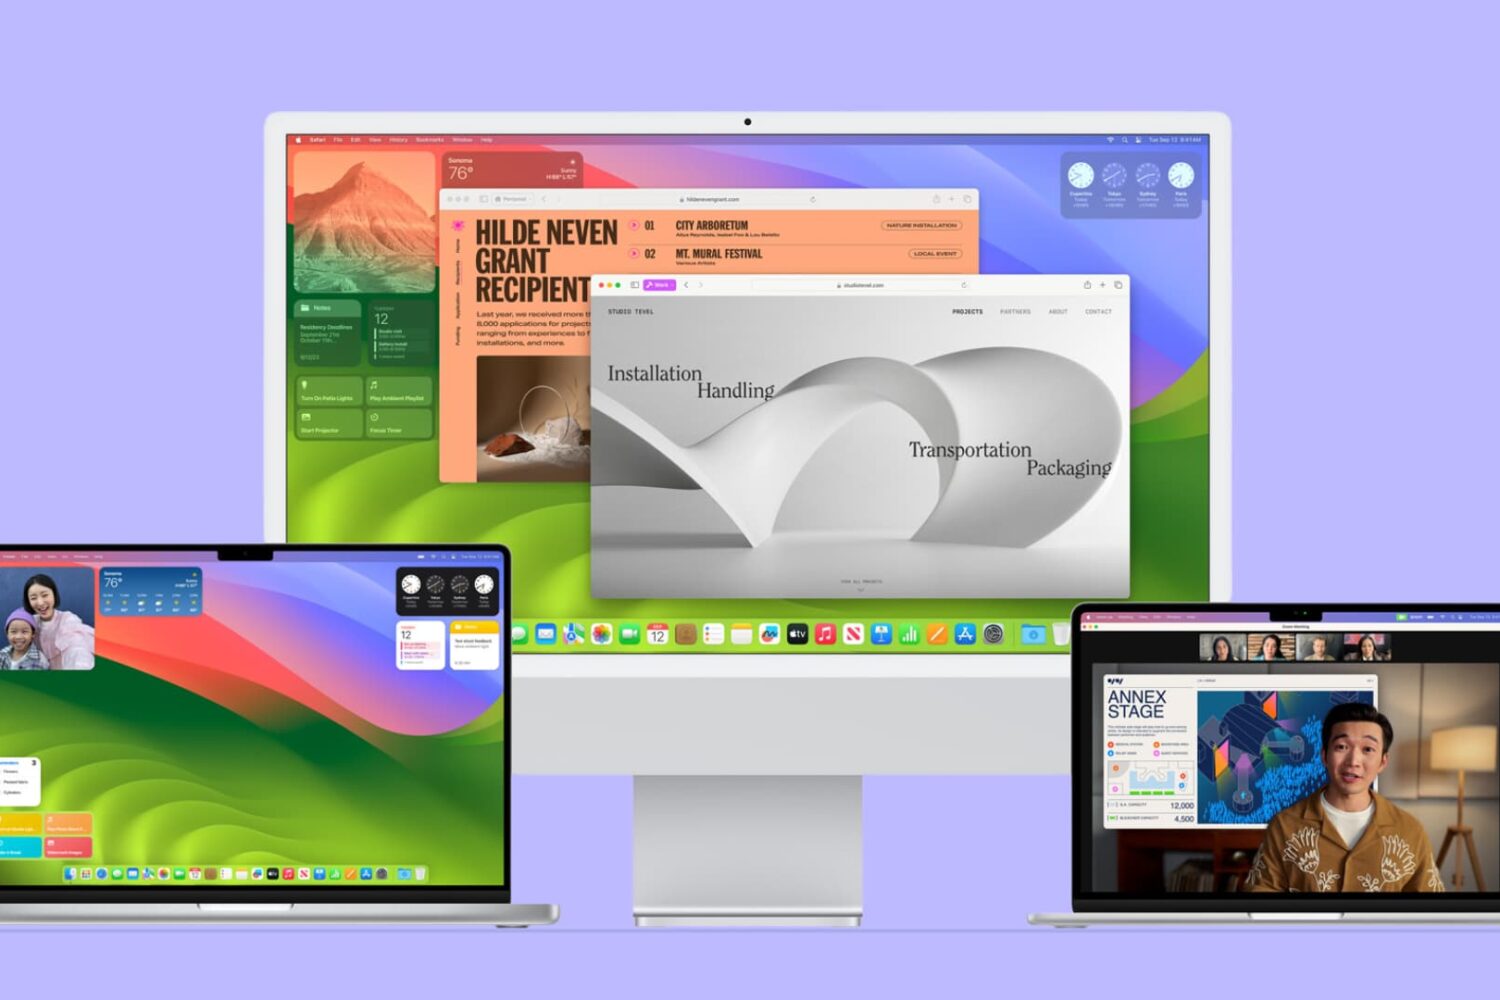 MacBook Pro, iMac, and MacBook Air running macOS Sonoma